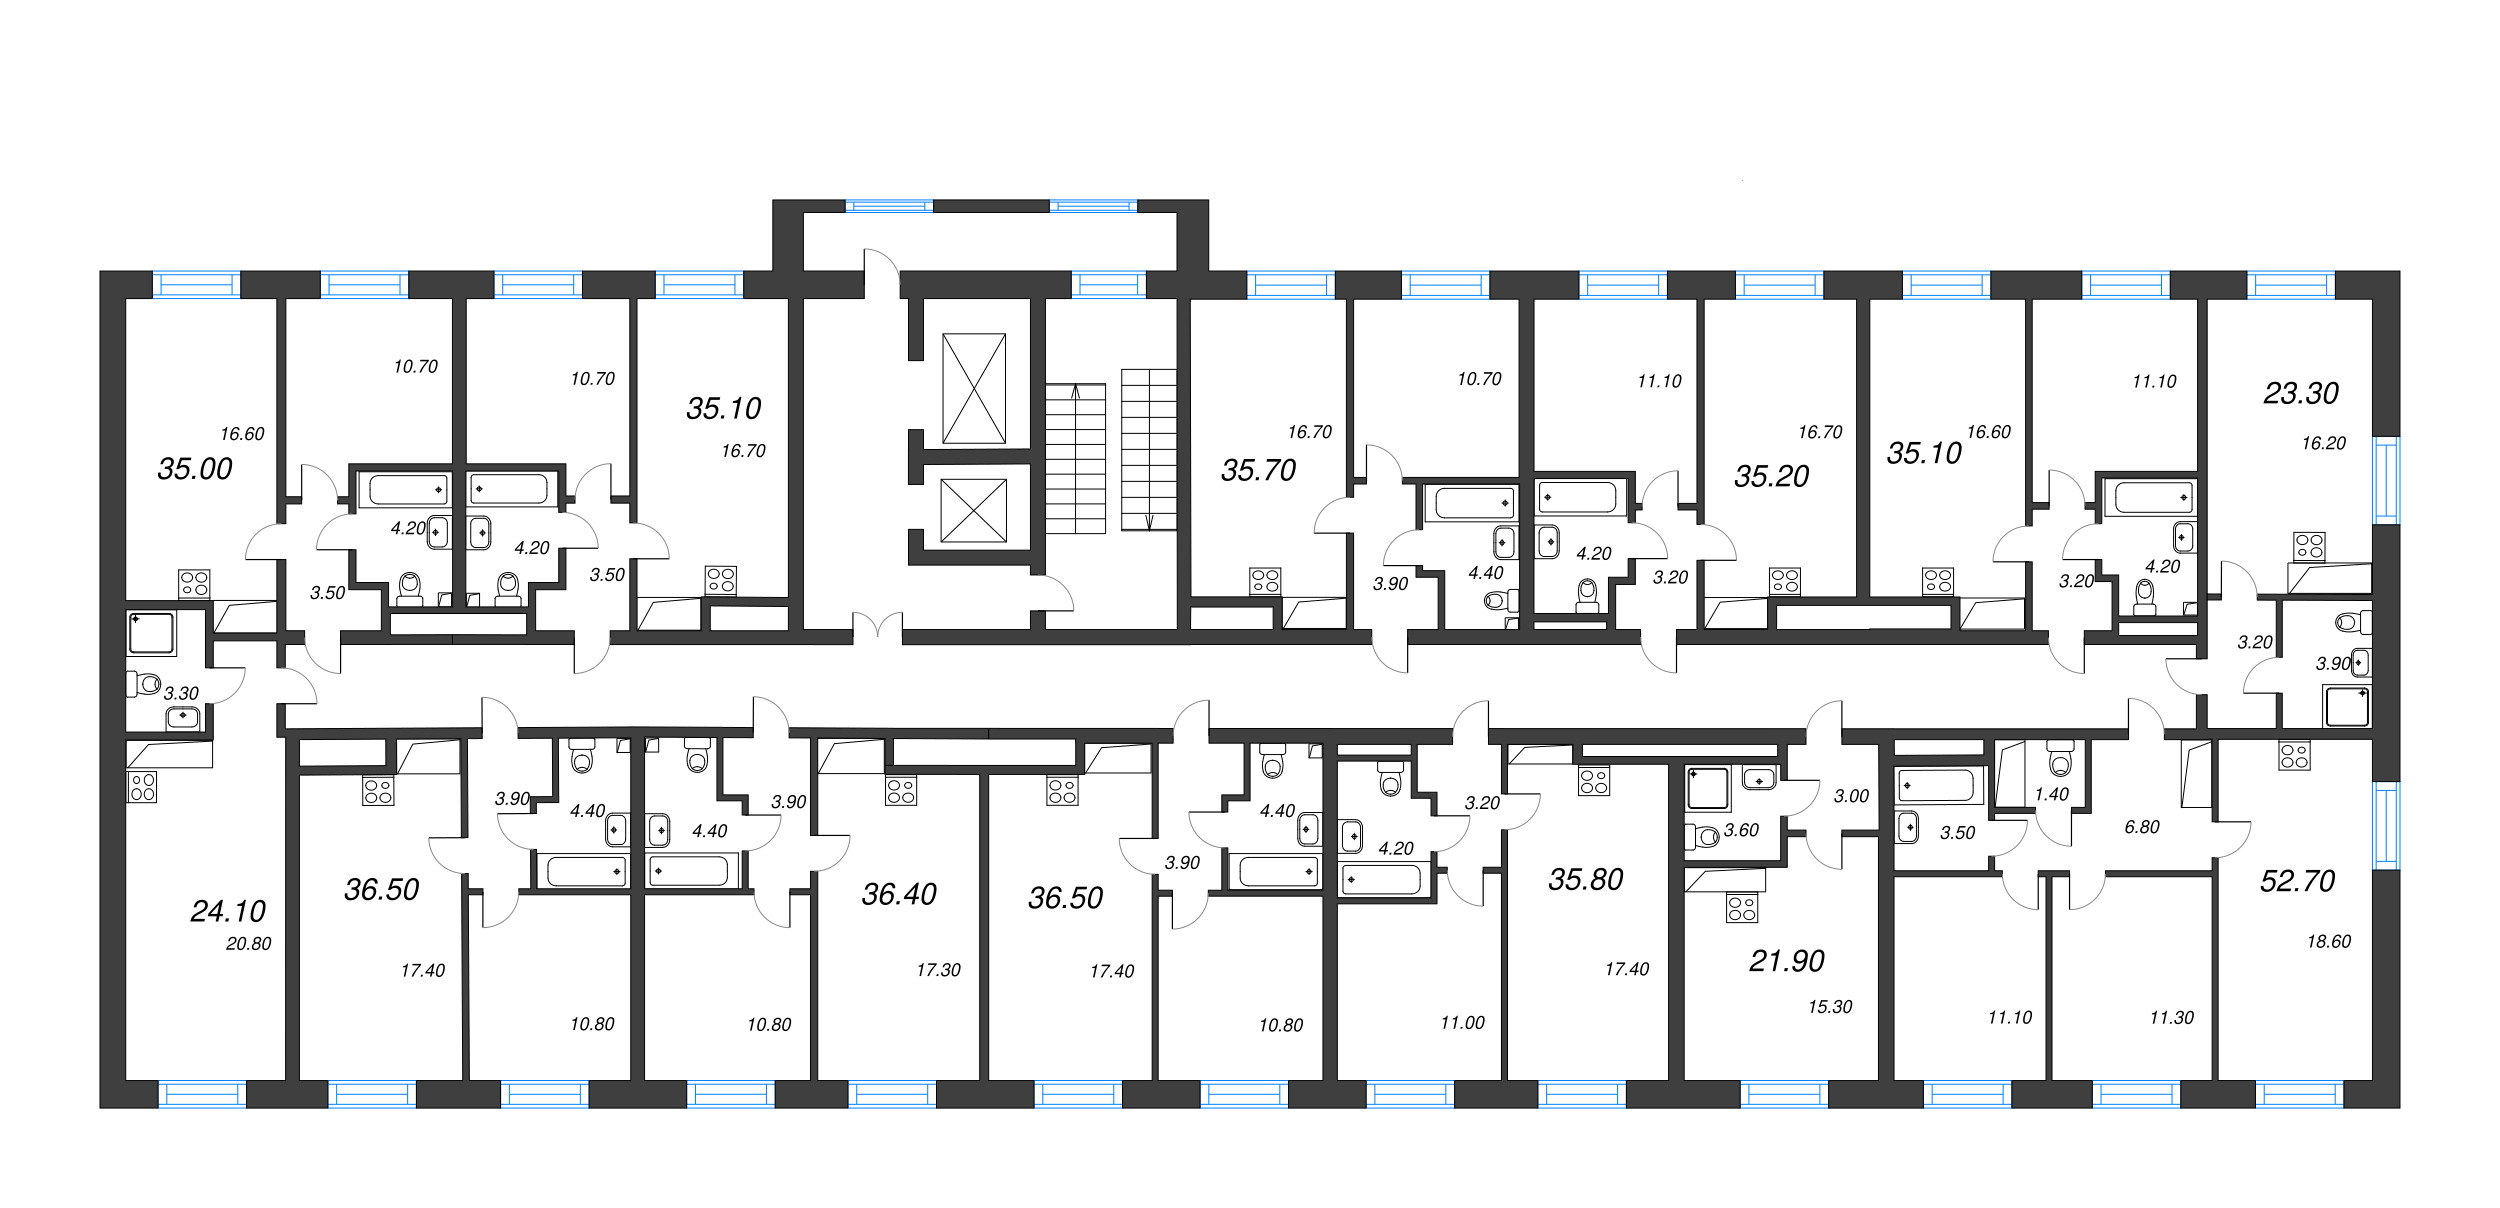 2-комнатная (Евро) квартира, 35.2 м² - планировка этажа